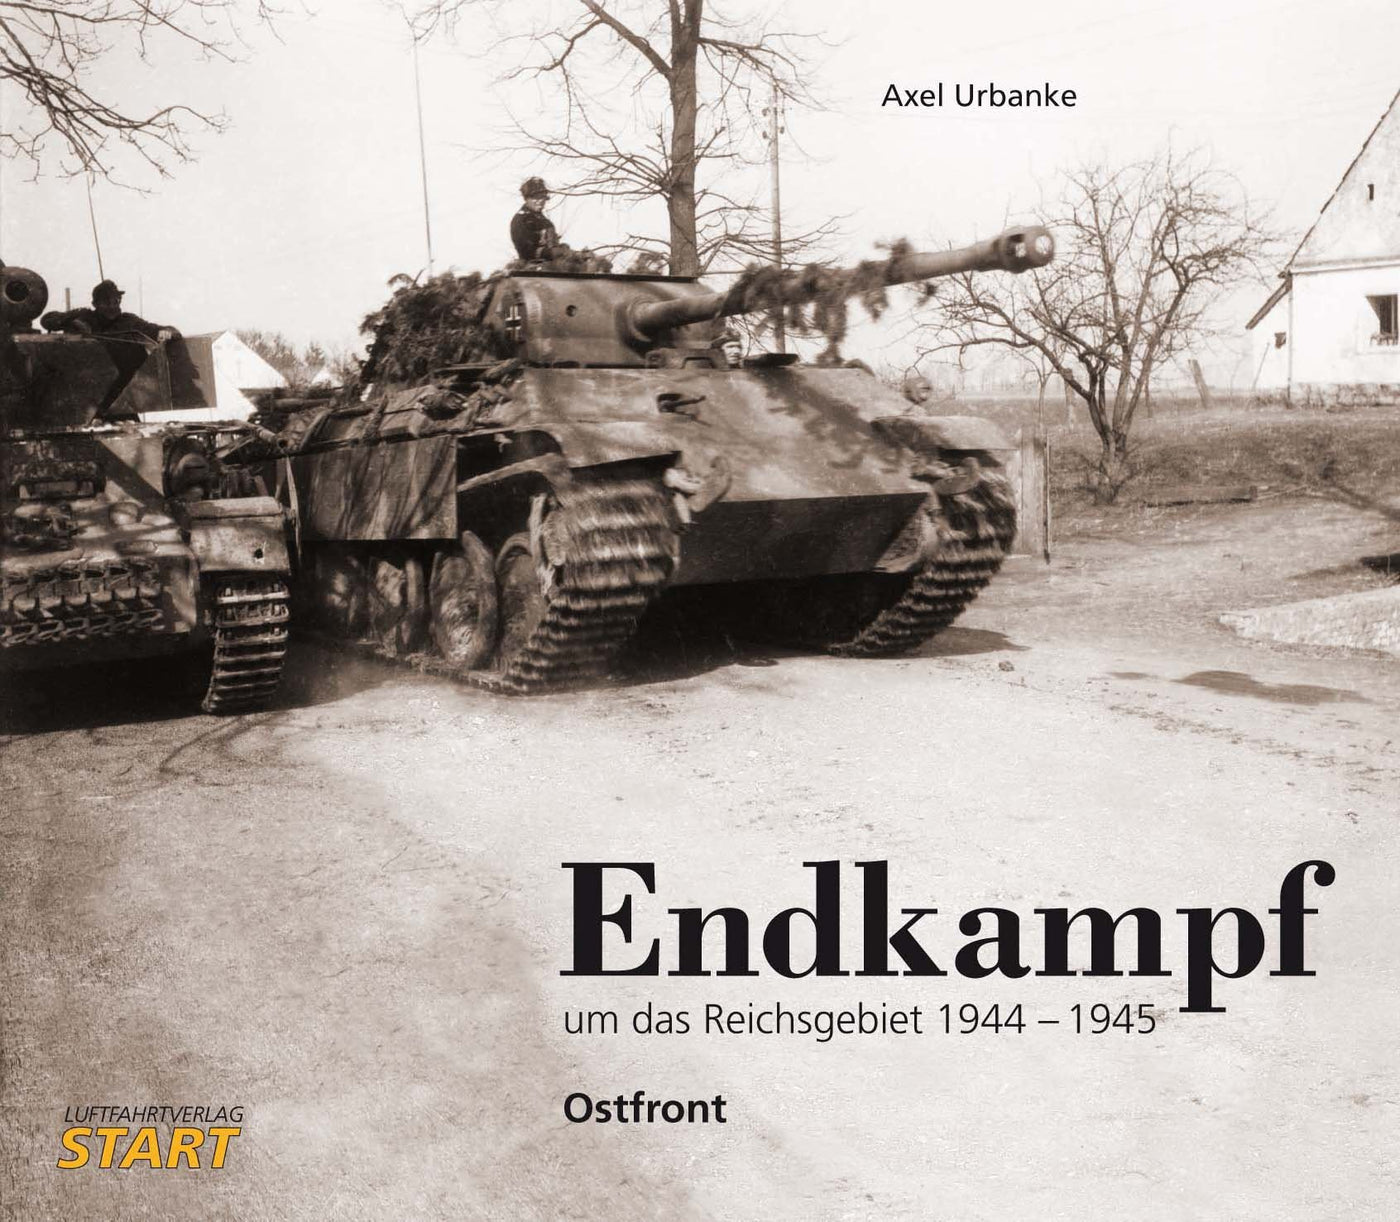 ENDKAMPF 1944-45 (Revised Edition)